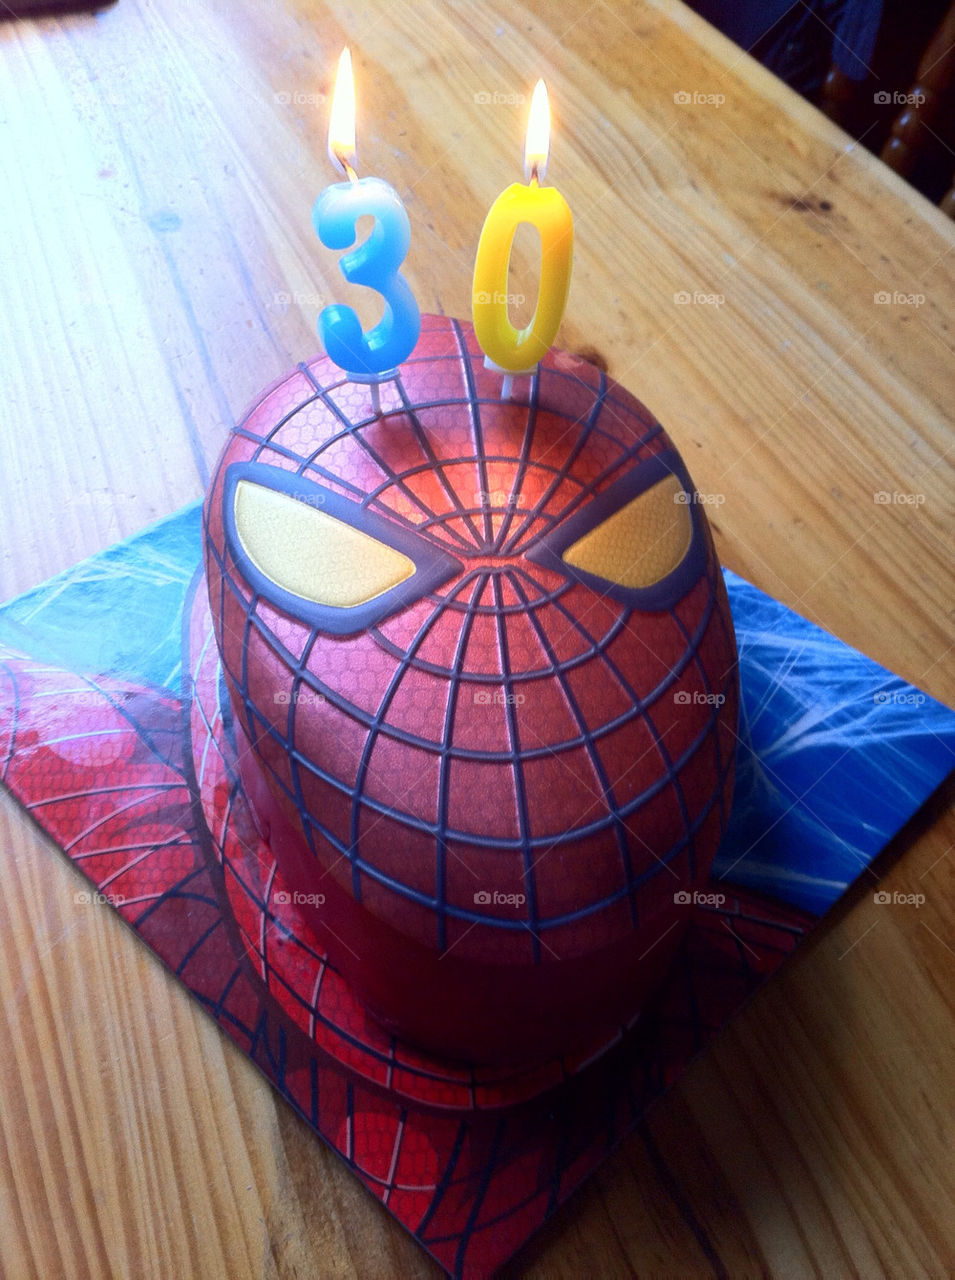 birthday cake candles spiderman by randomandom